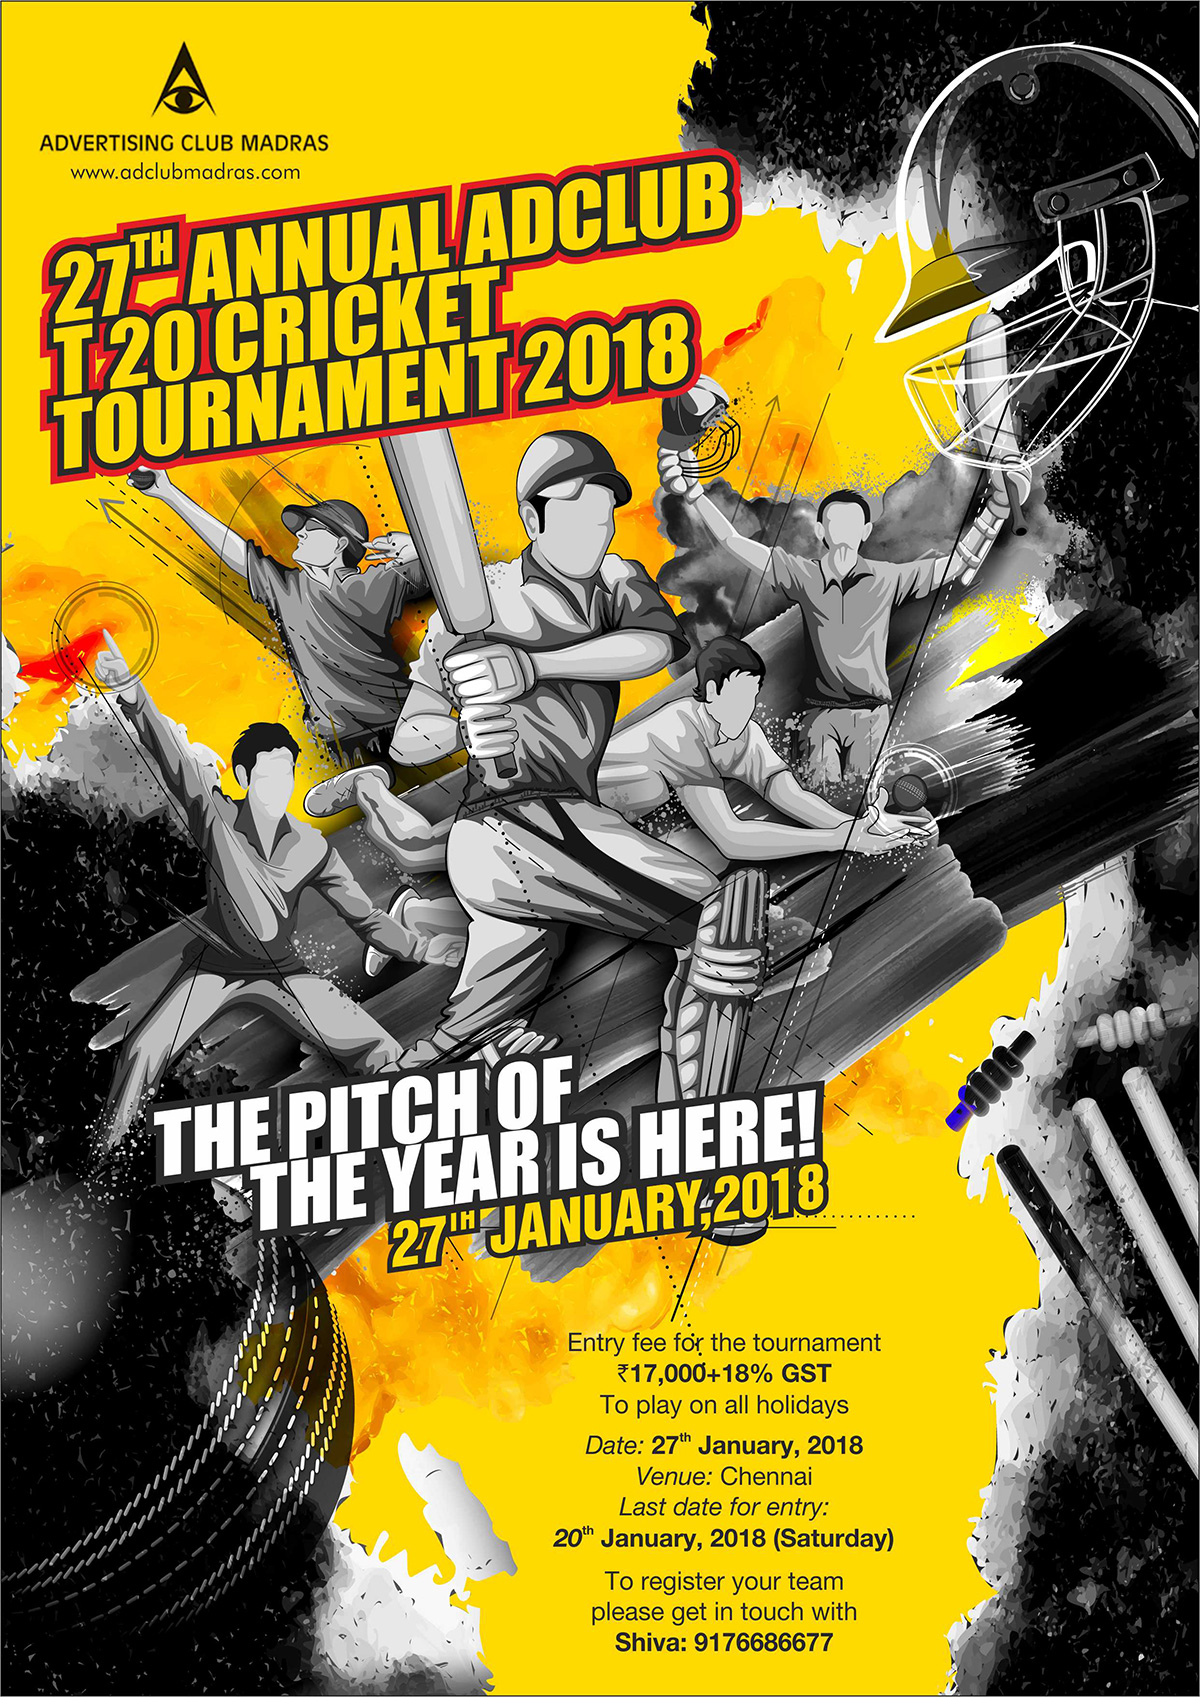 27th Annual Adclub T20 Cricket Tournament 2018